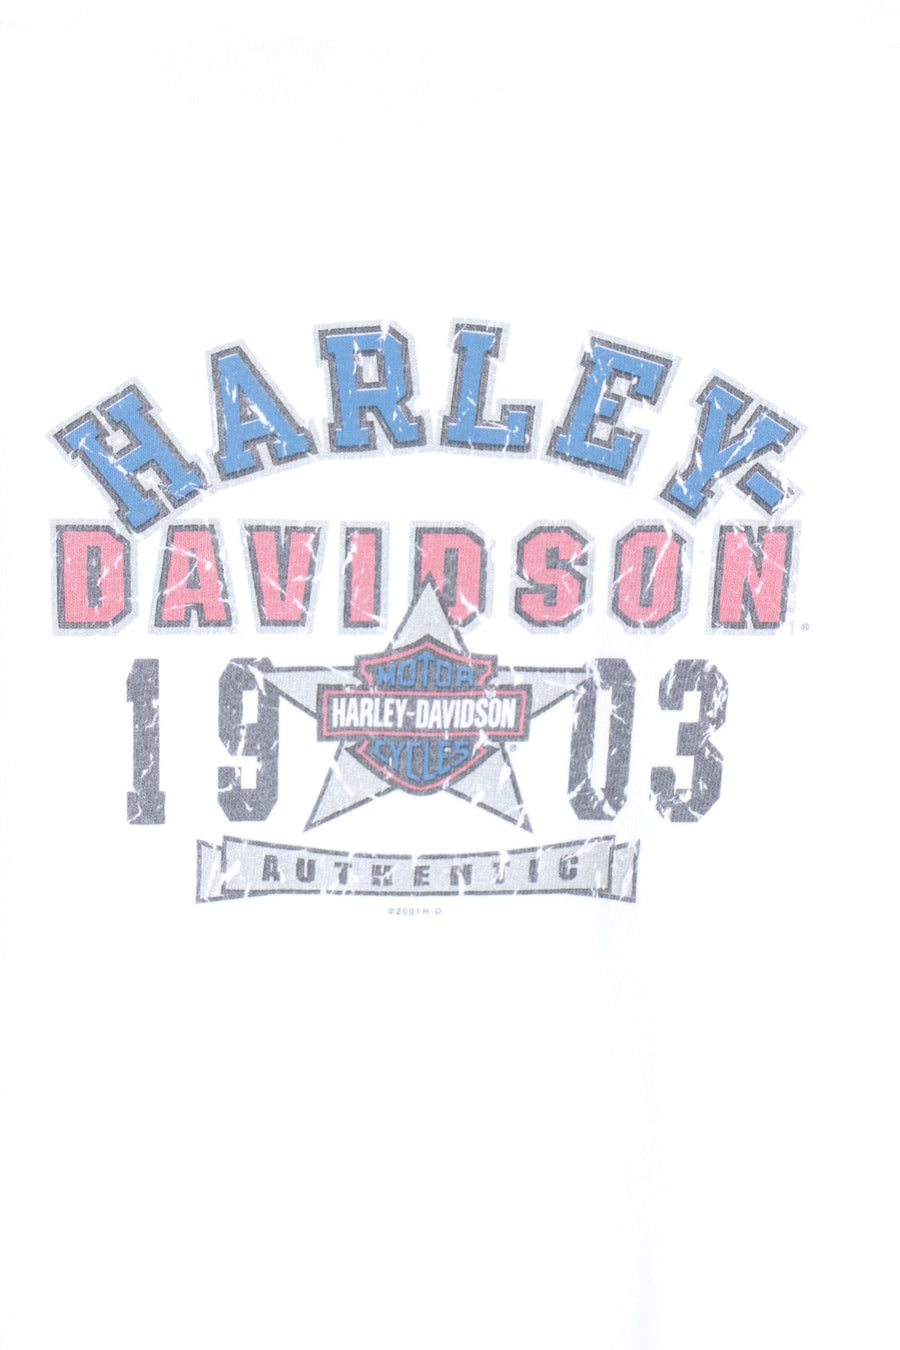 HARLEY DAVIDSON Battlefield Horses Battle Graphic Tee (S) - Vintage Sole Melbourne